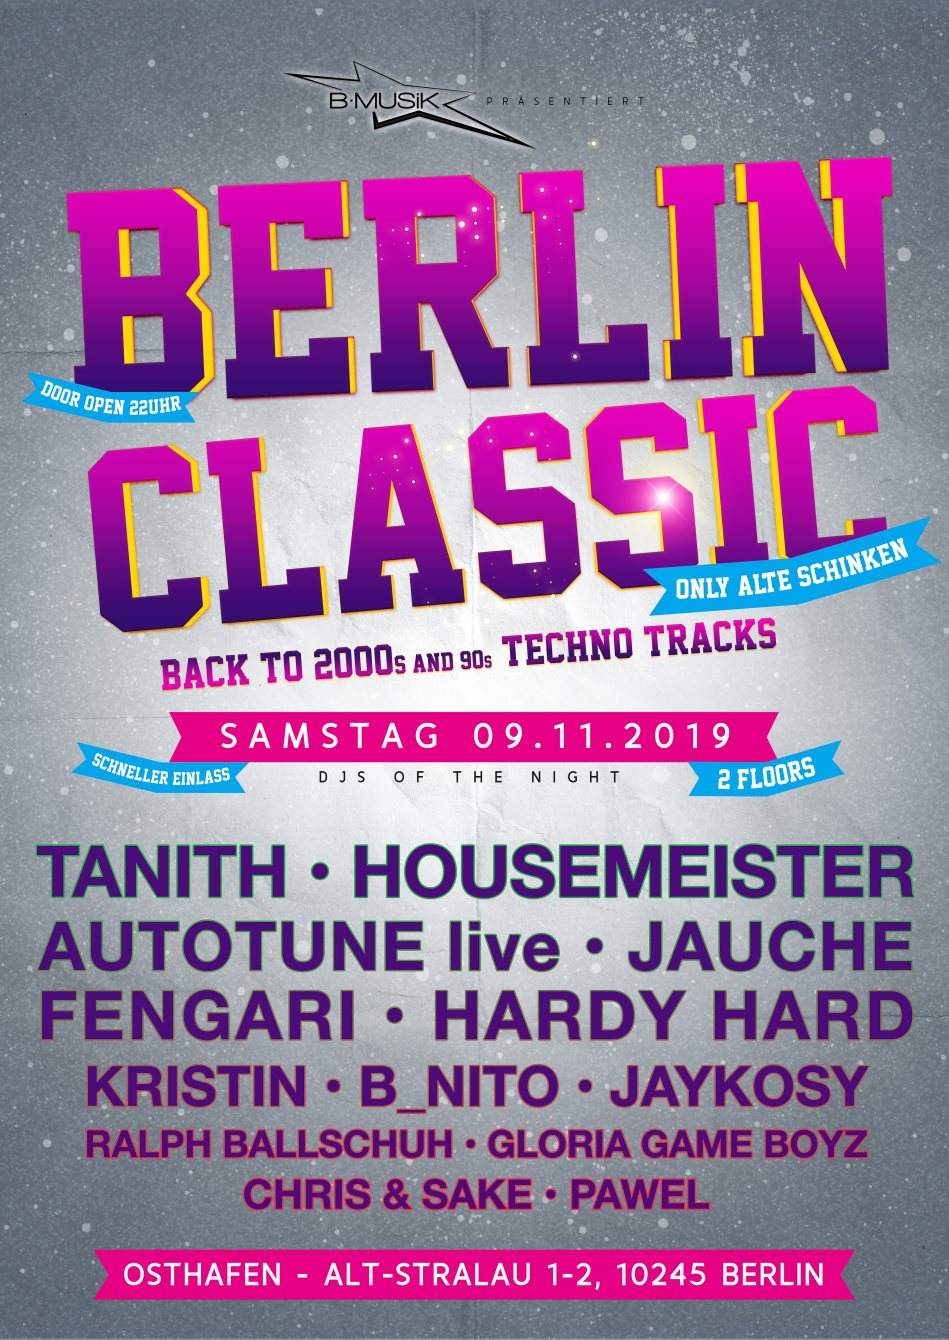 Berlin Classic - Back to 2000er 90er Techno - フライヤー表